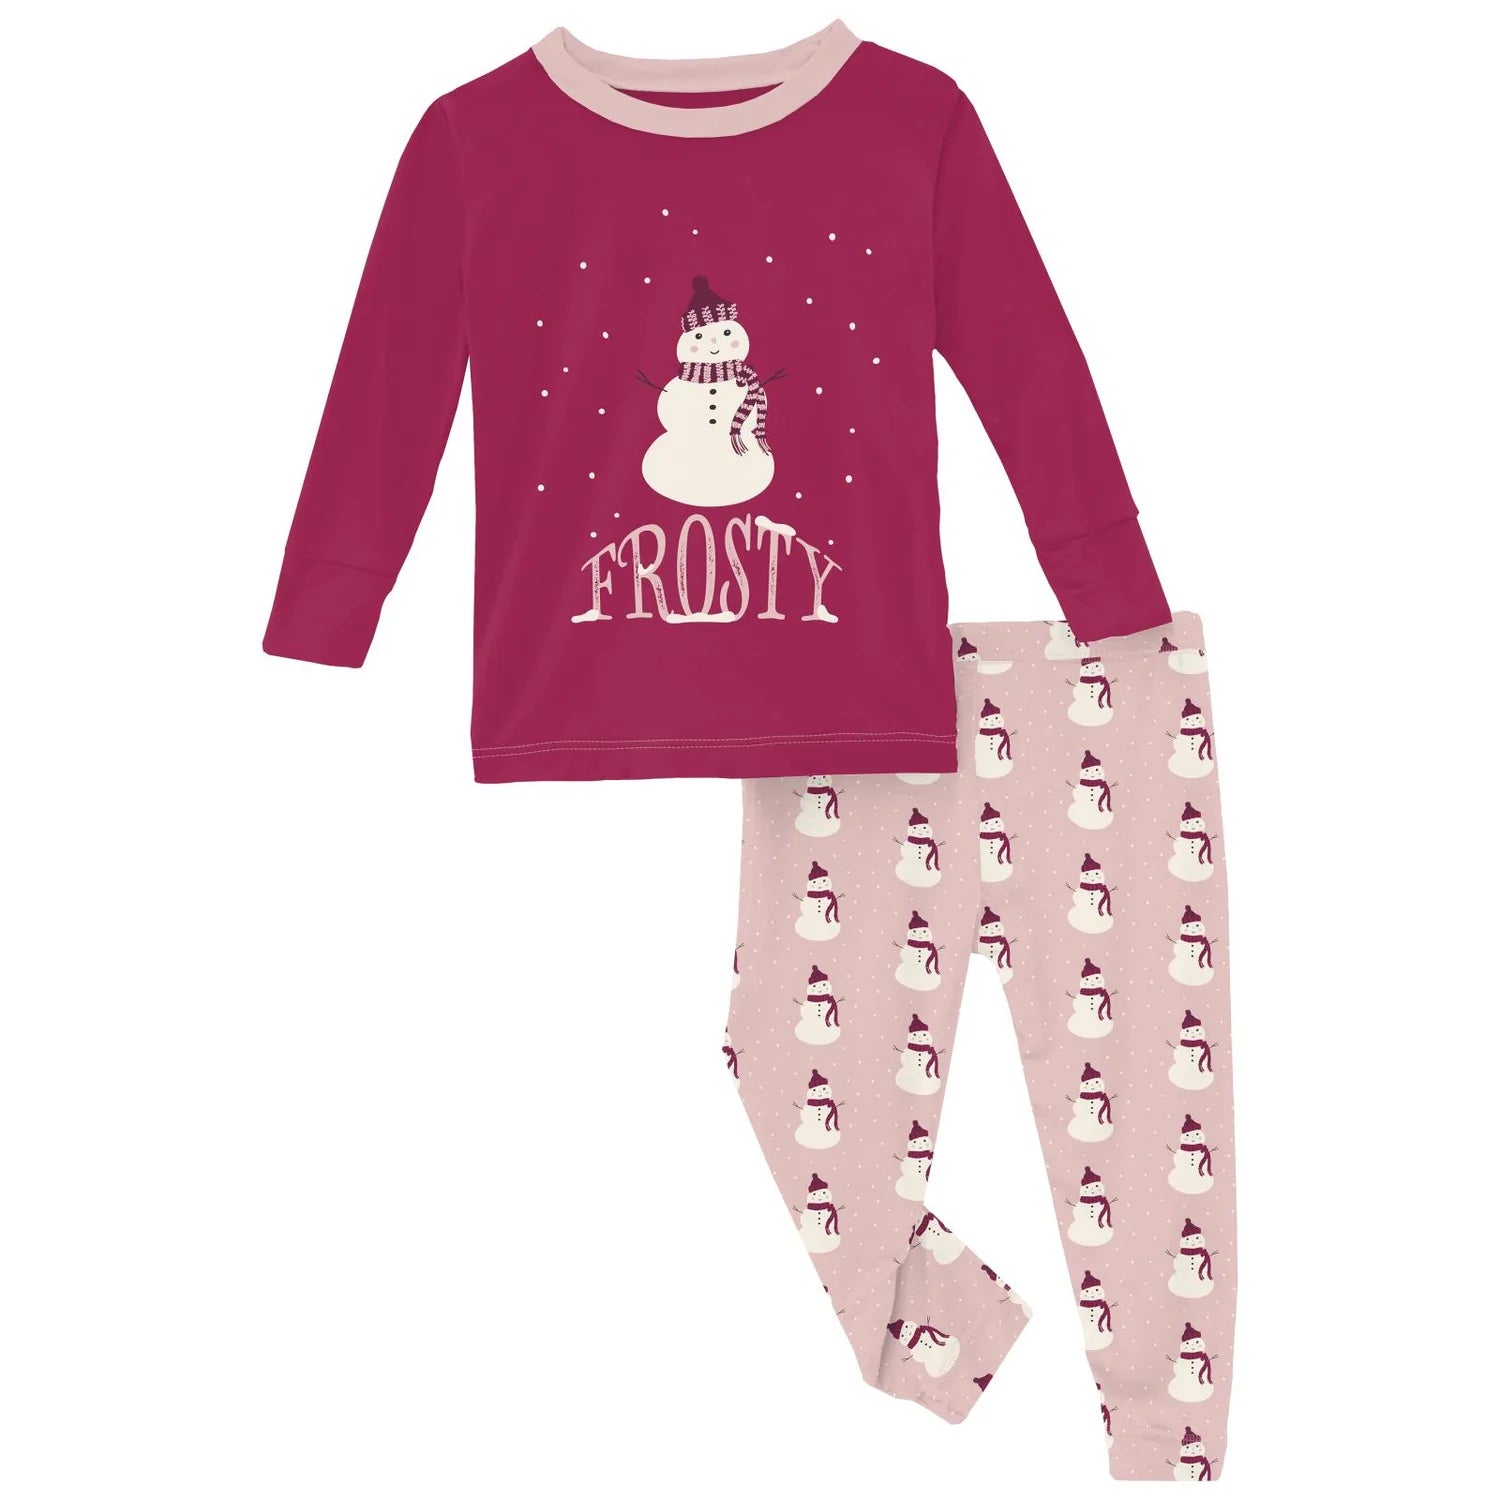 Graphic Tee Pajama Set in Baby Rose Tiny Snowman